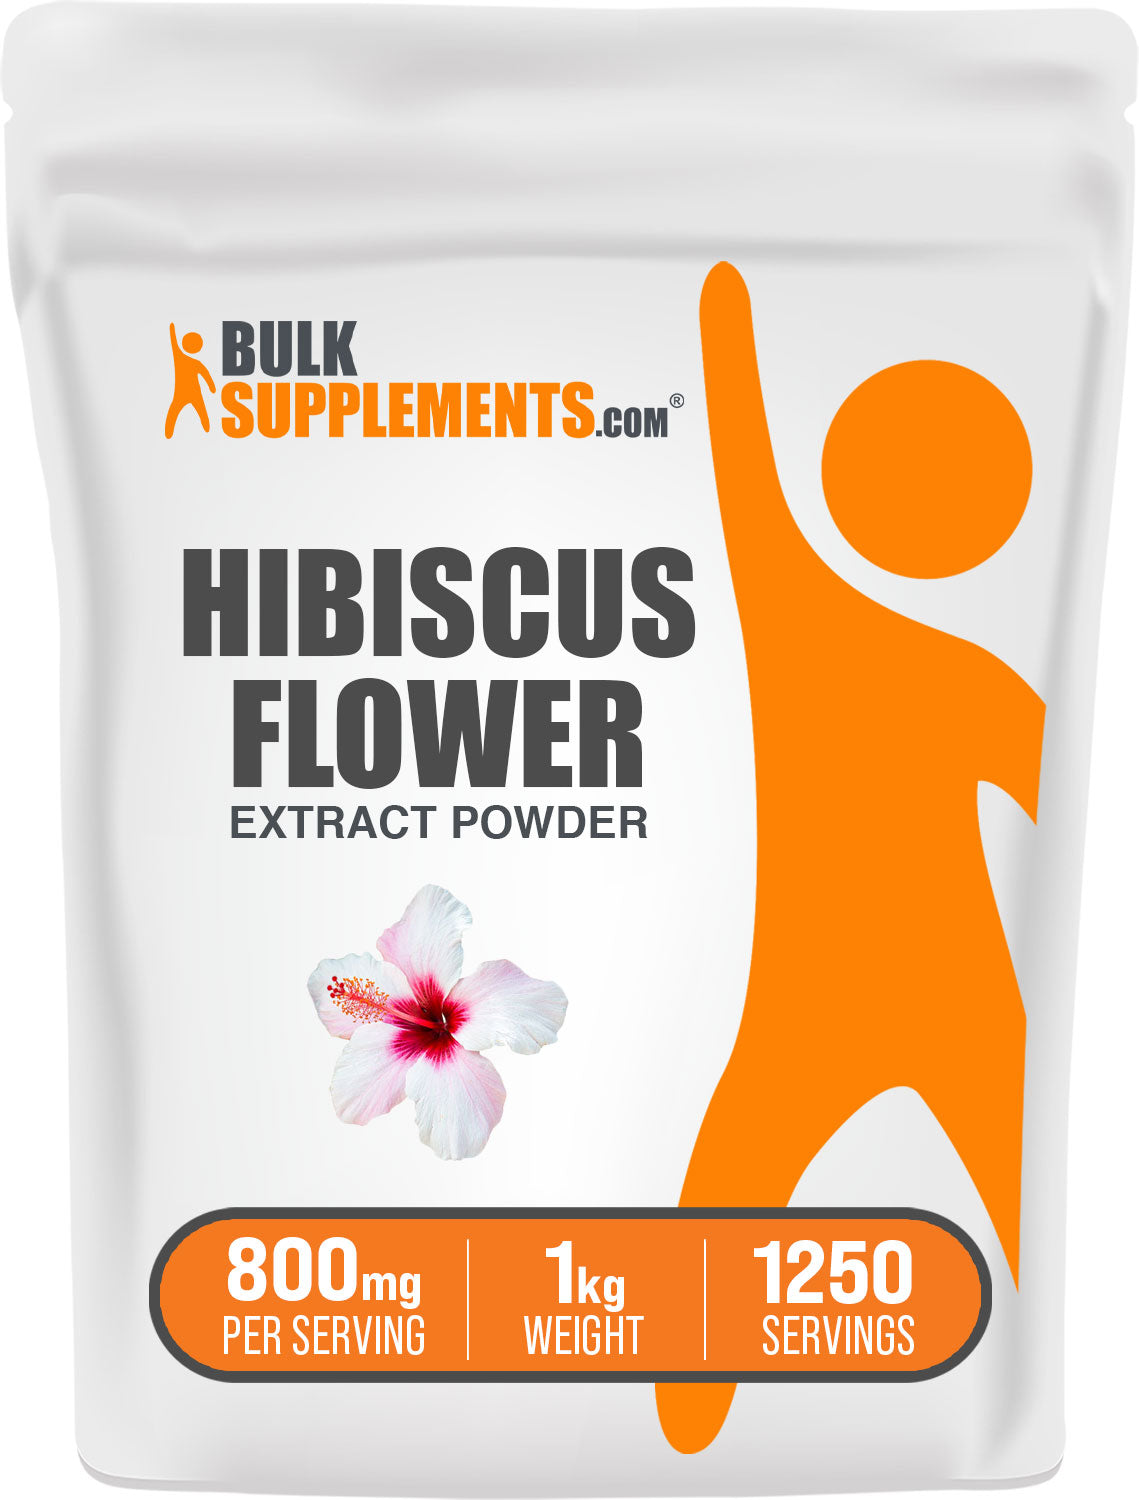 Hibiscus Flower Extract Powder 1kg